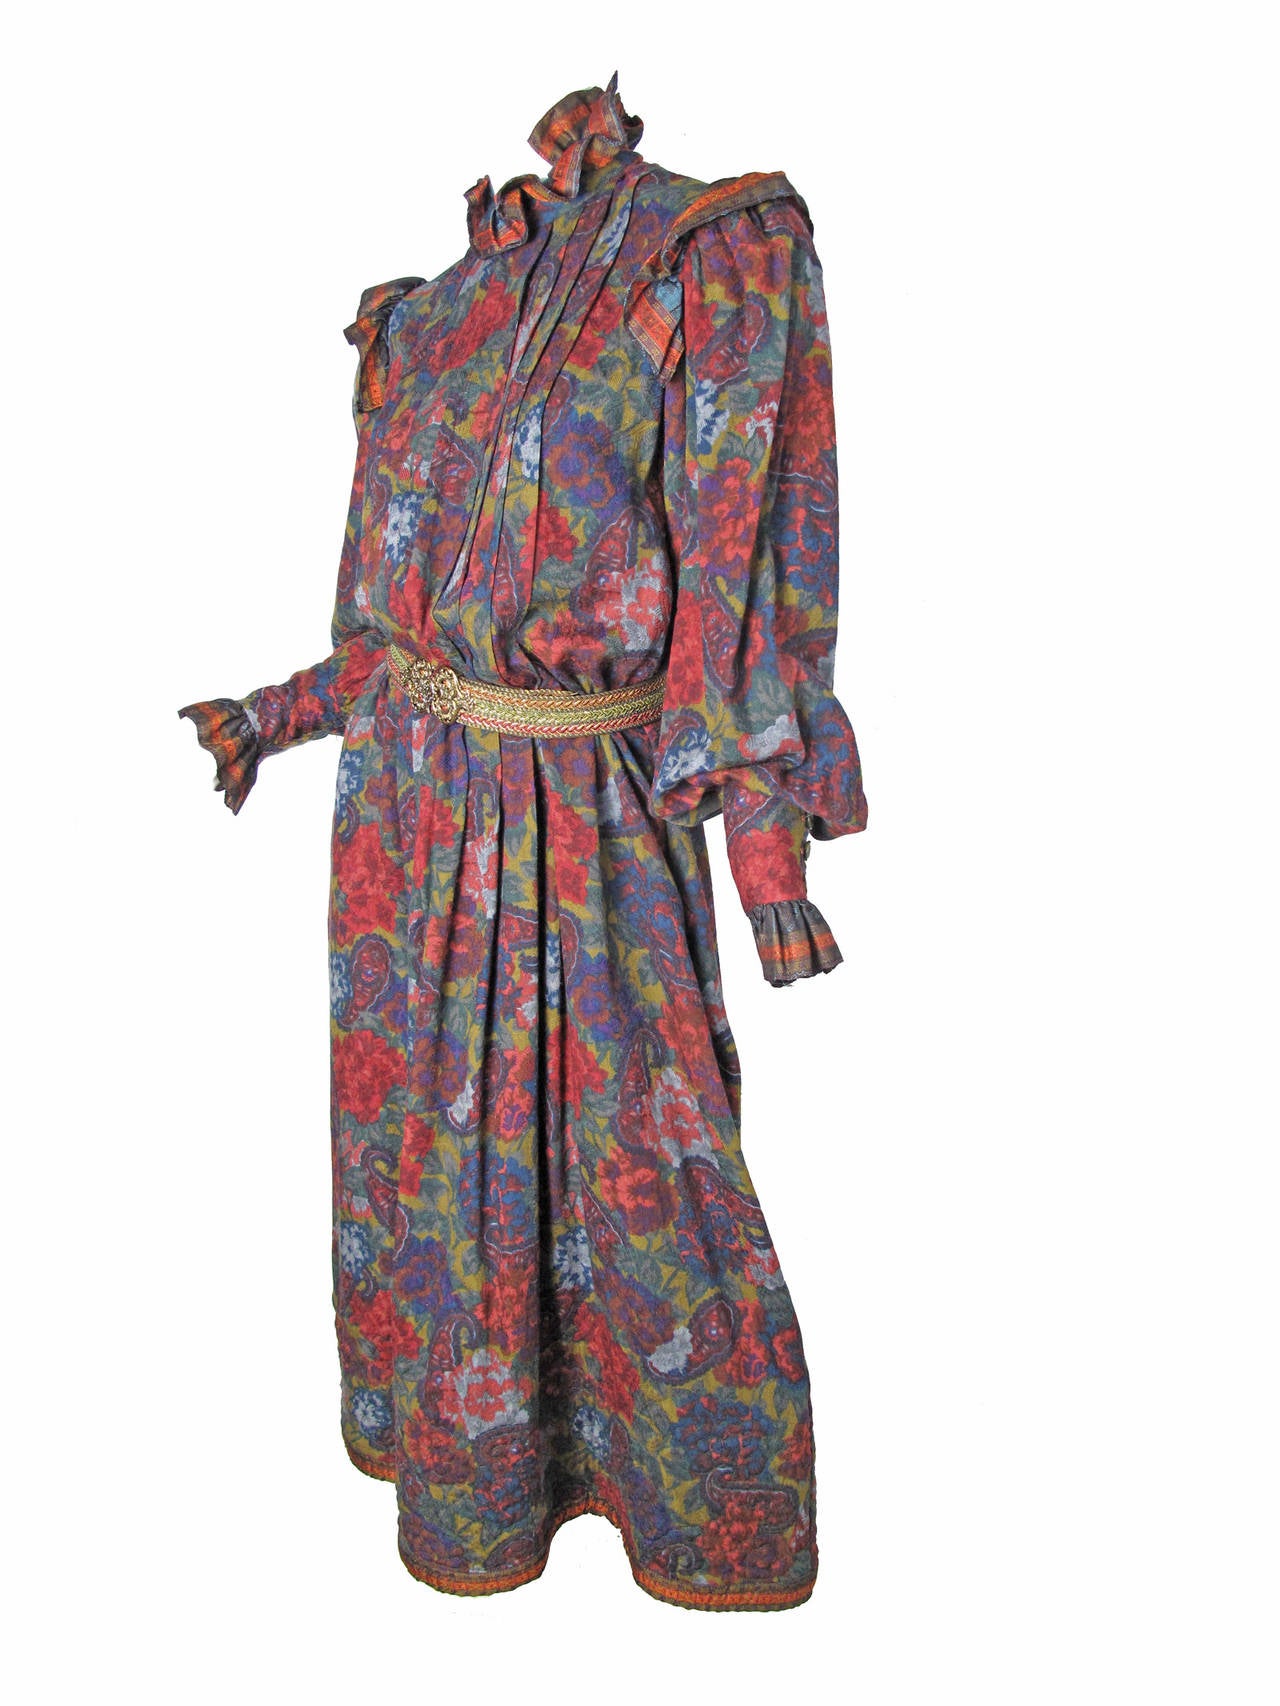 Women's Oscar de la Renta Peasant Dress with Quilting